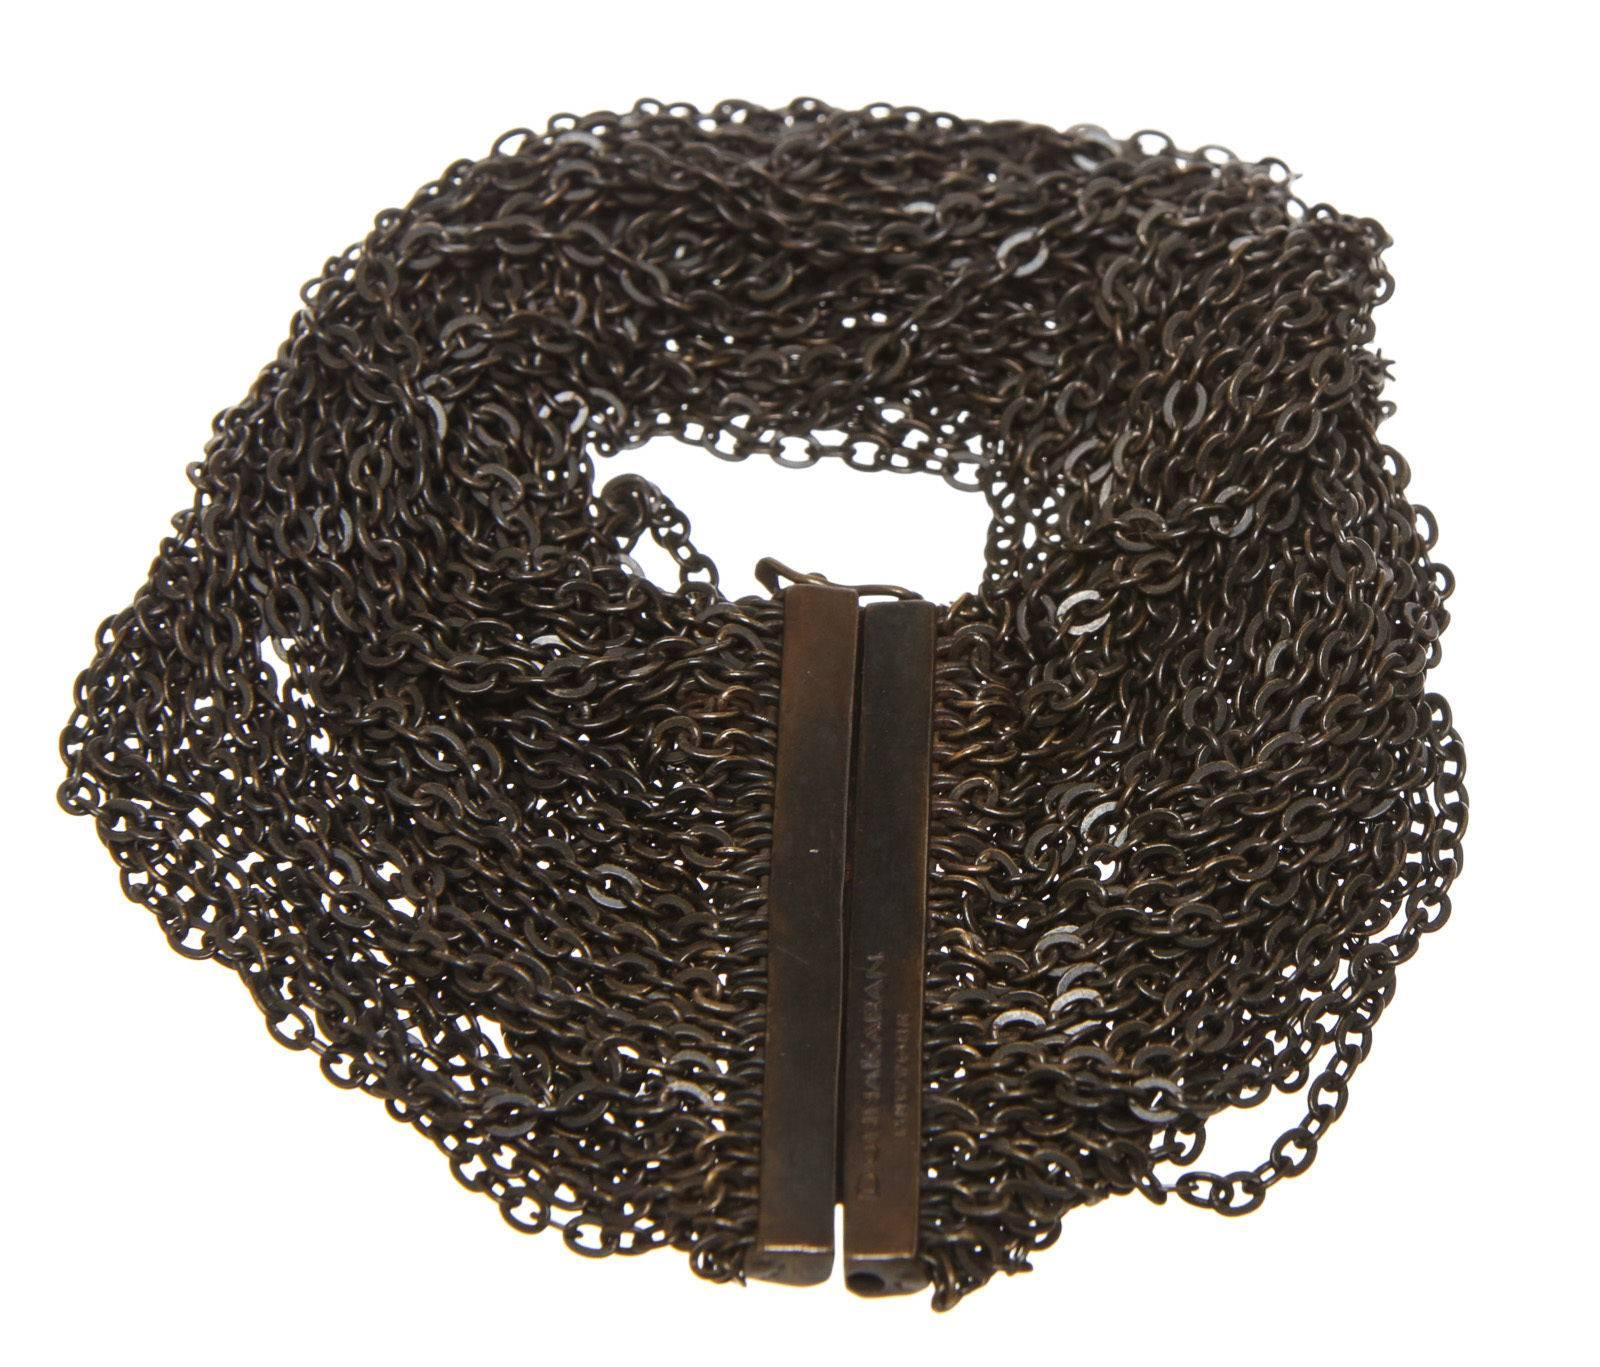 Designer: Donna Karan
Type: Bracelet
Condition: Excellent condition
Color: Bronze
Material: Metal
Dimensions: 8